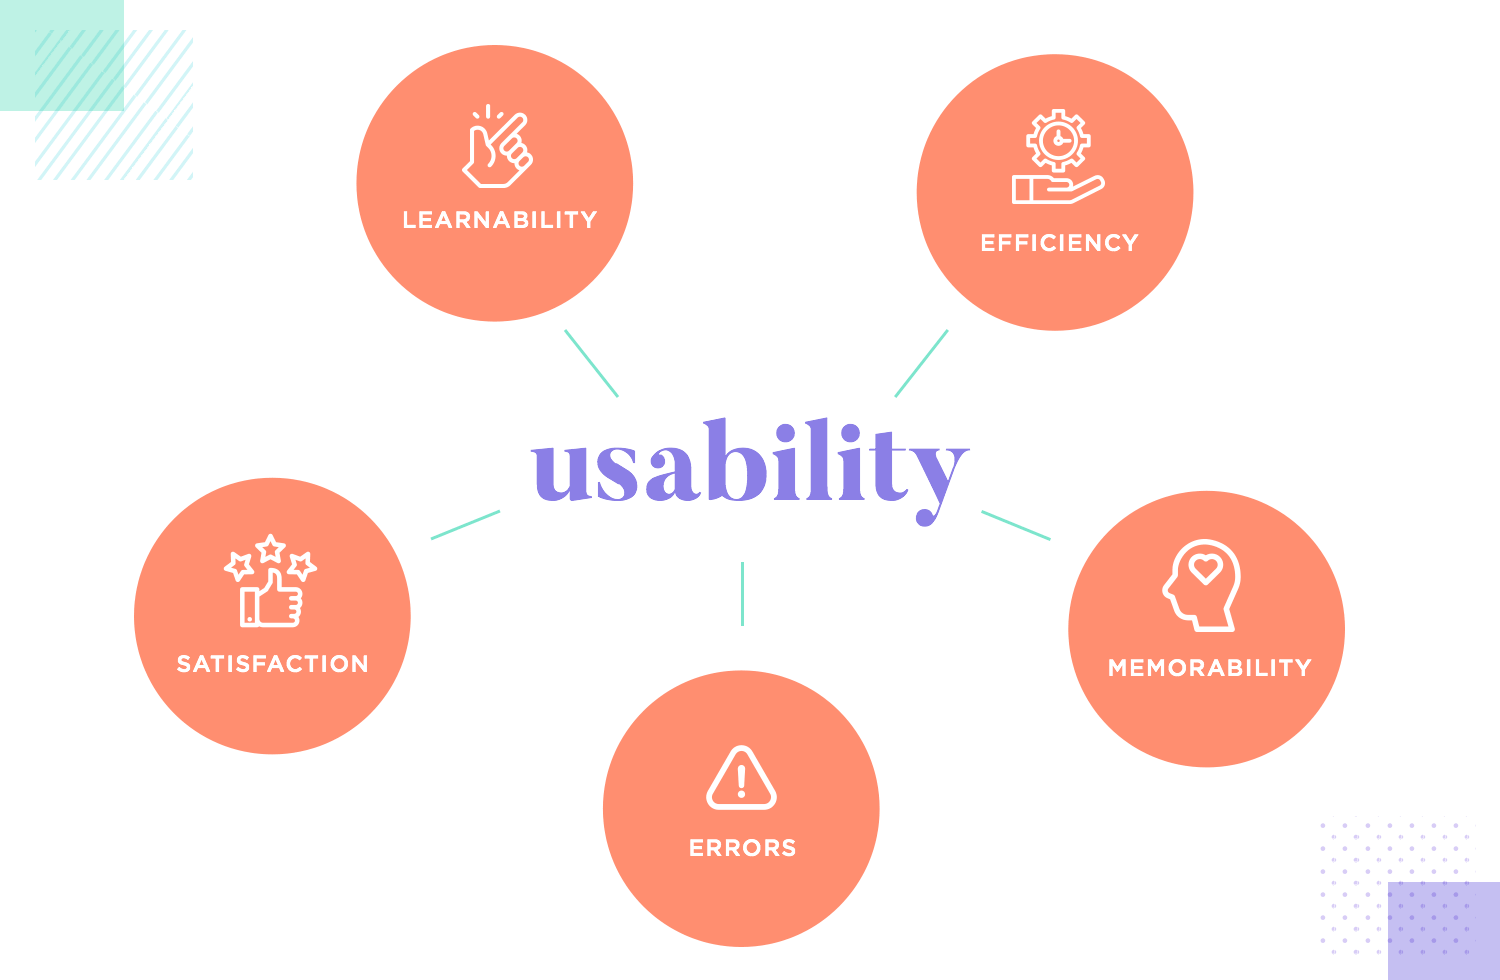 usability as ux design principle